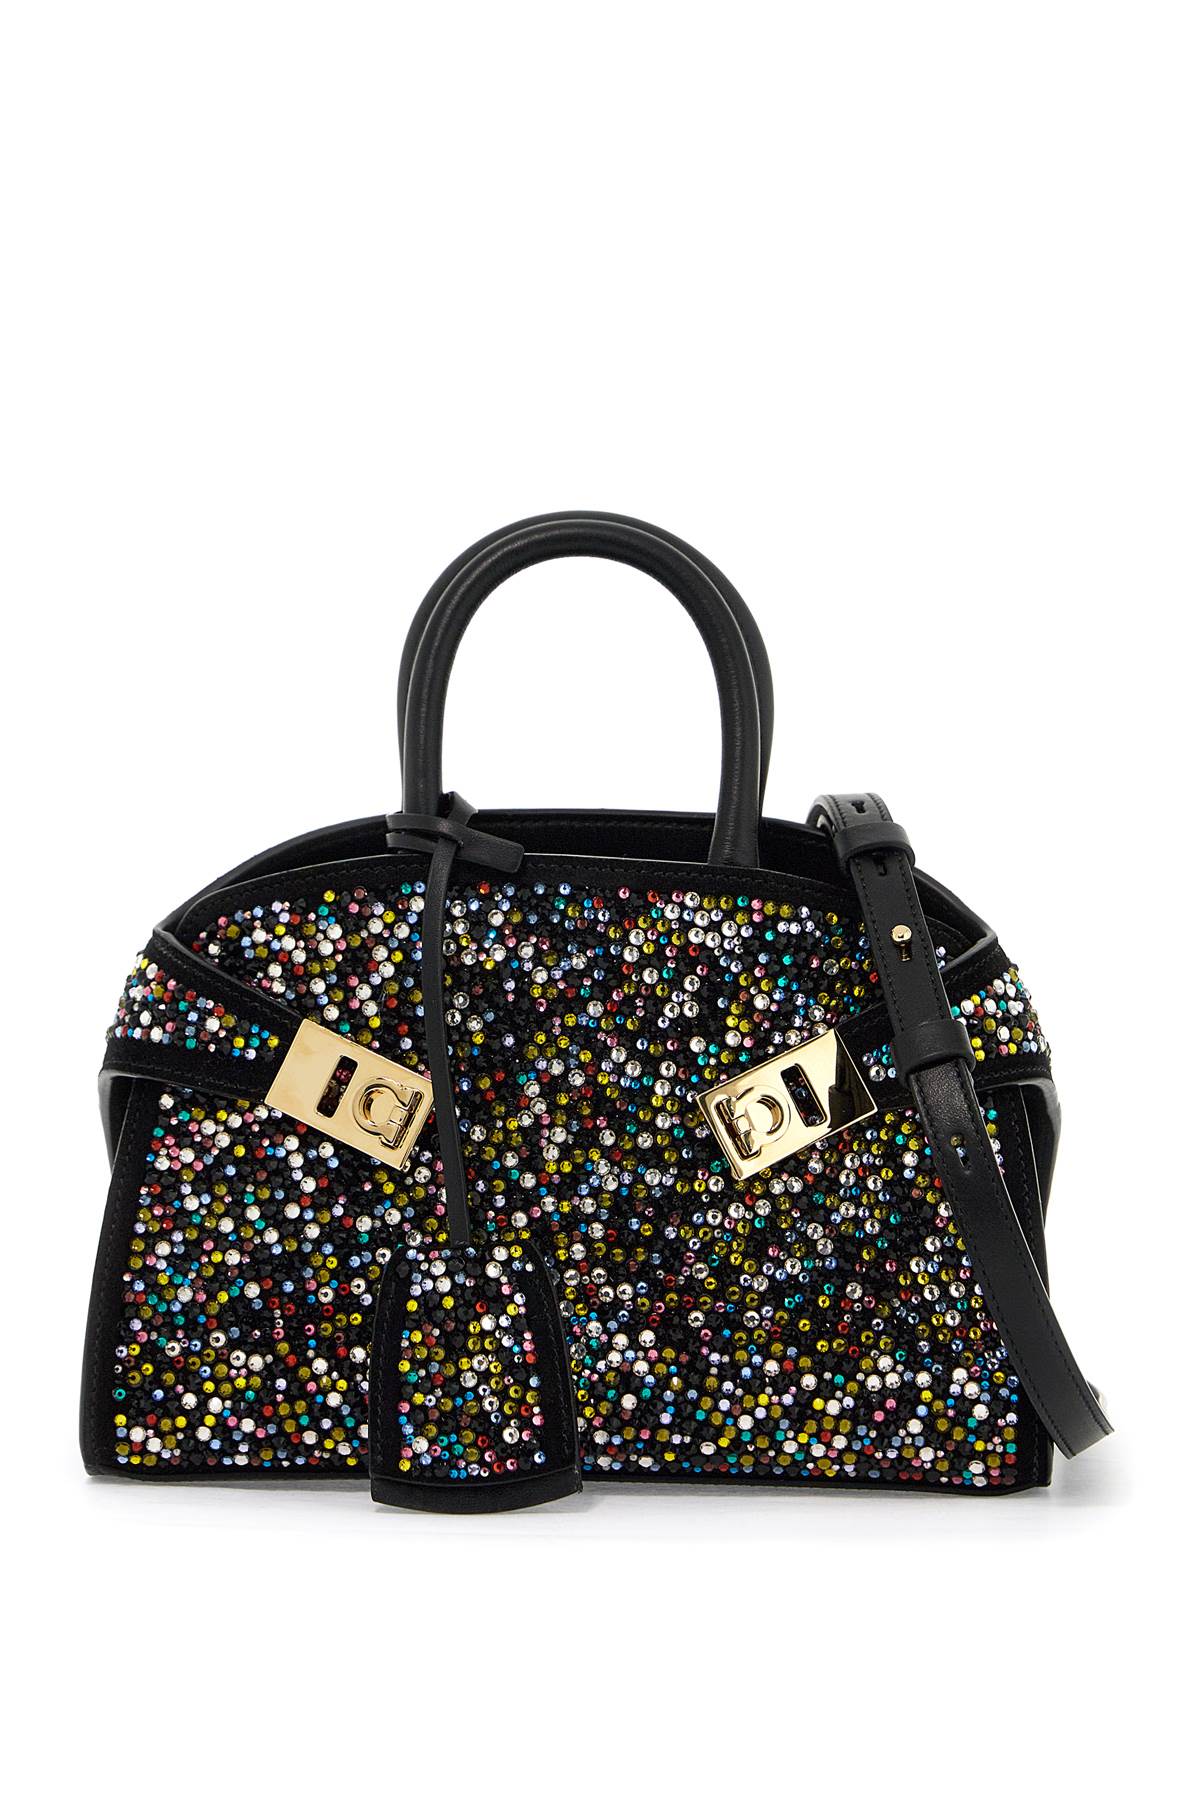 FERRAGAMO Glamourous Black Suede Handbag with Crystal Details